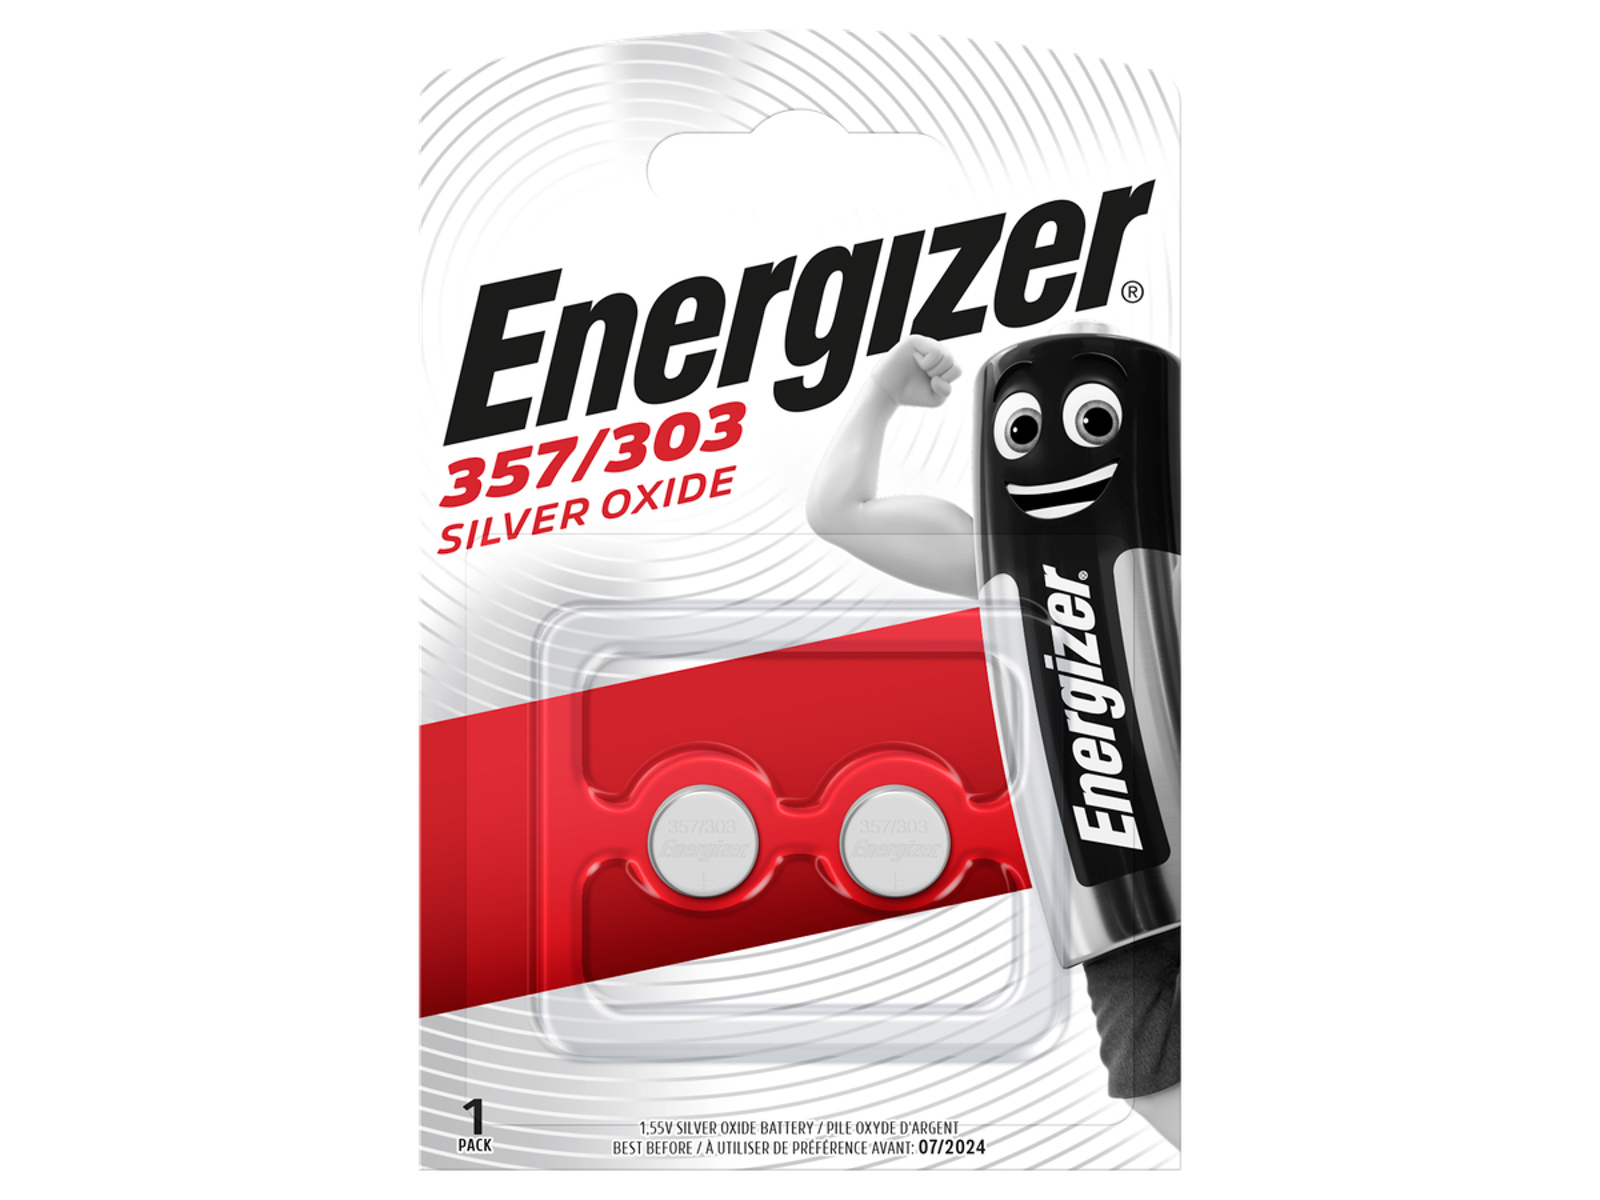 Energizer Multidrain 2x 357/303